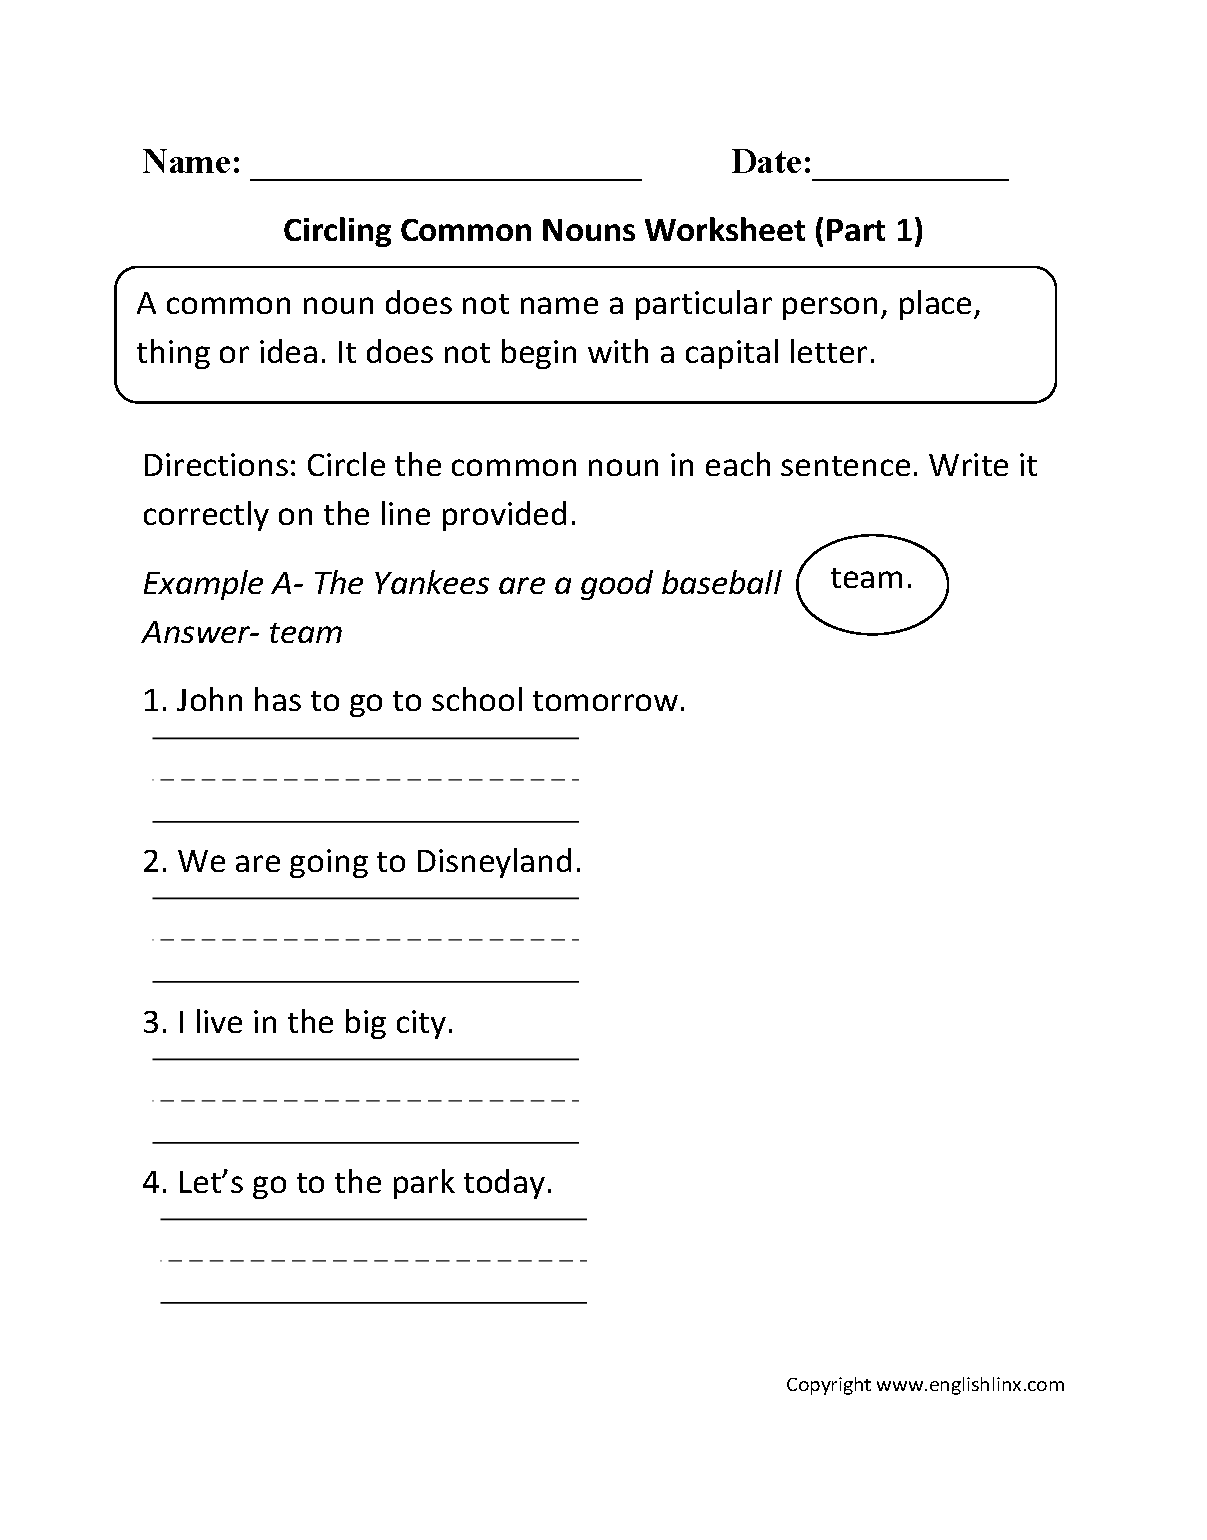 plural-noun-form-interactive-worksheet